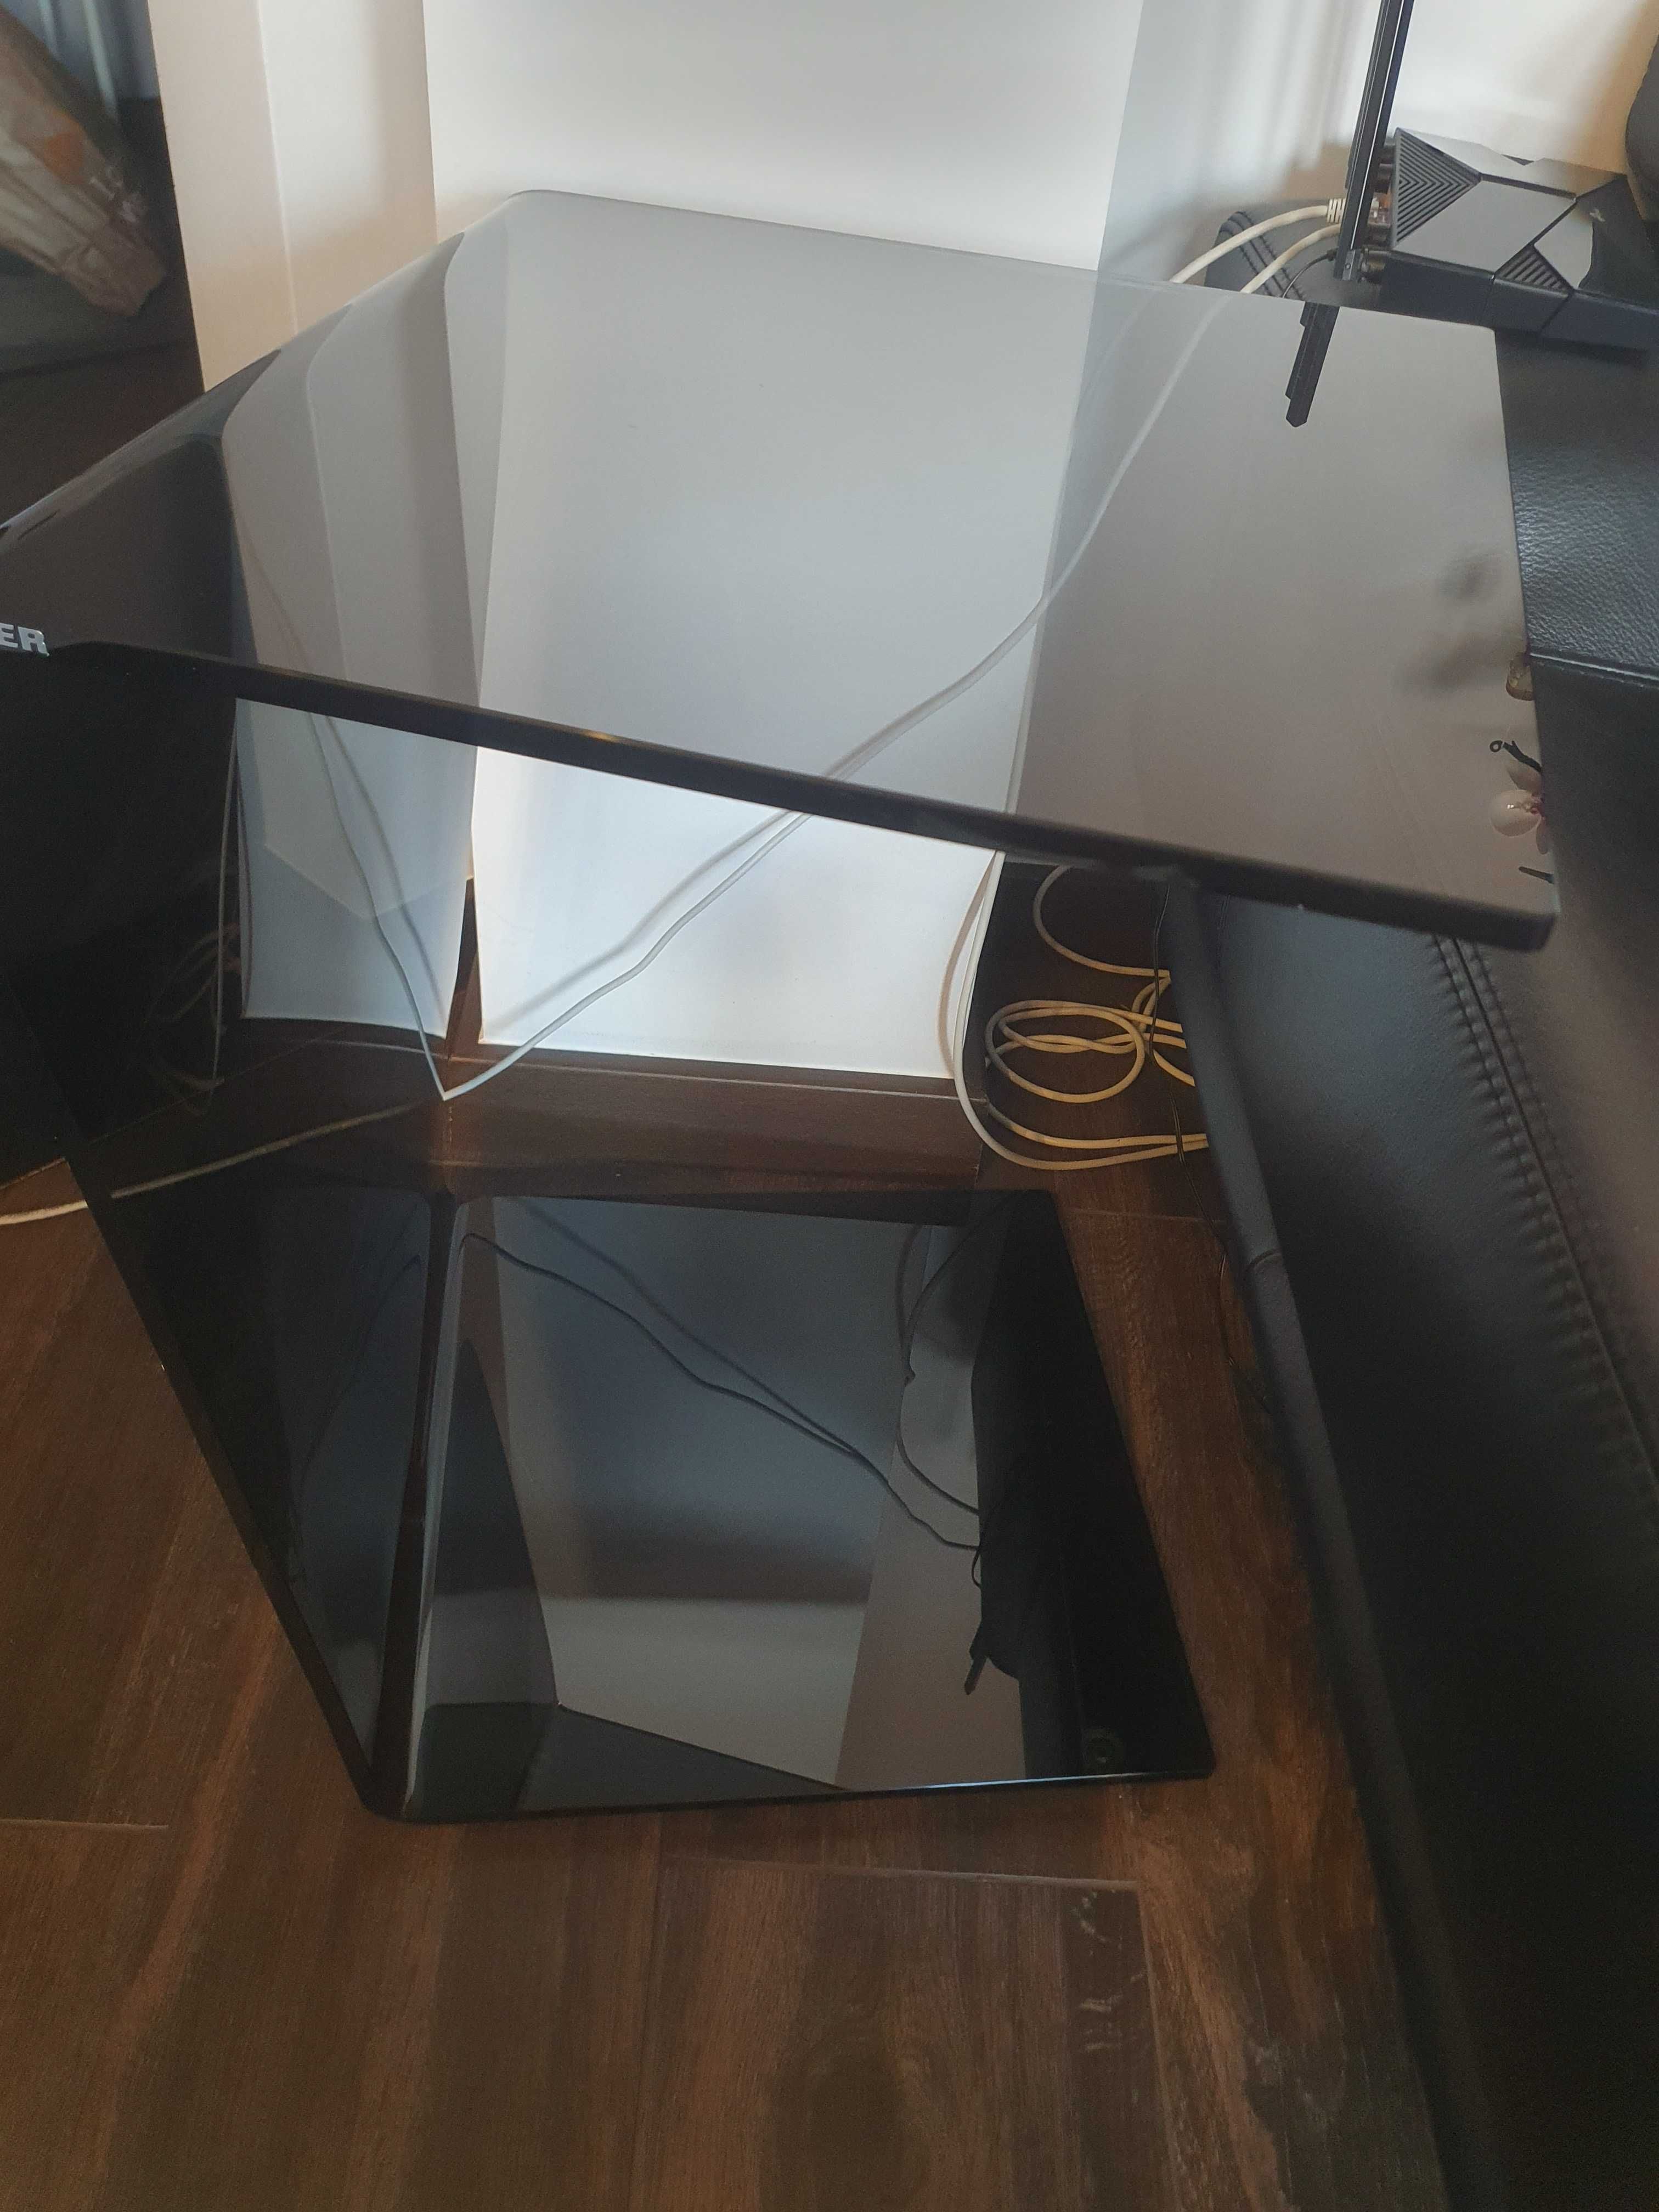 Szklany asymetryczny stolik marki Kler